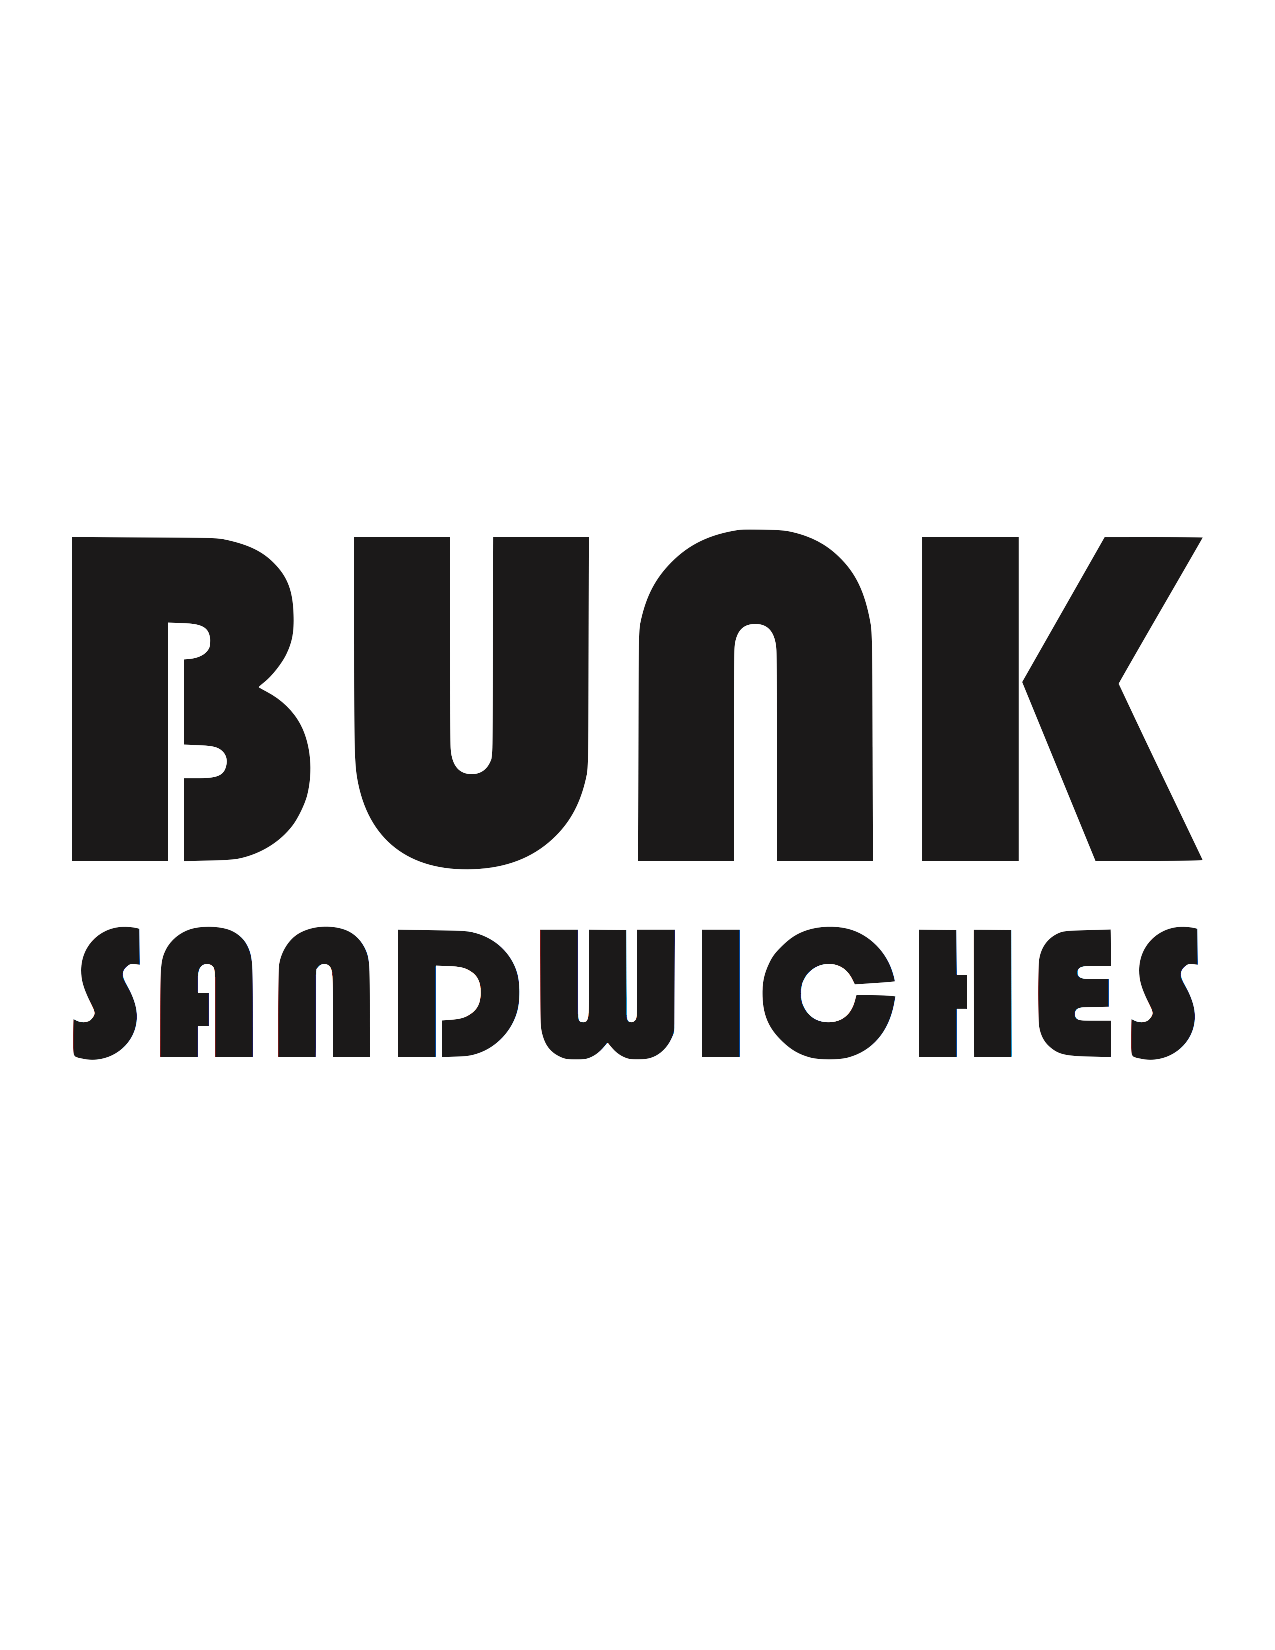 Bunk Sandwiches